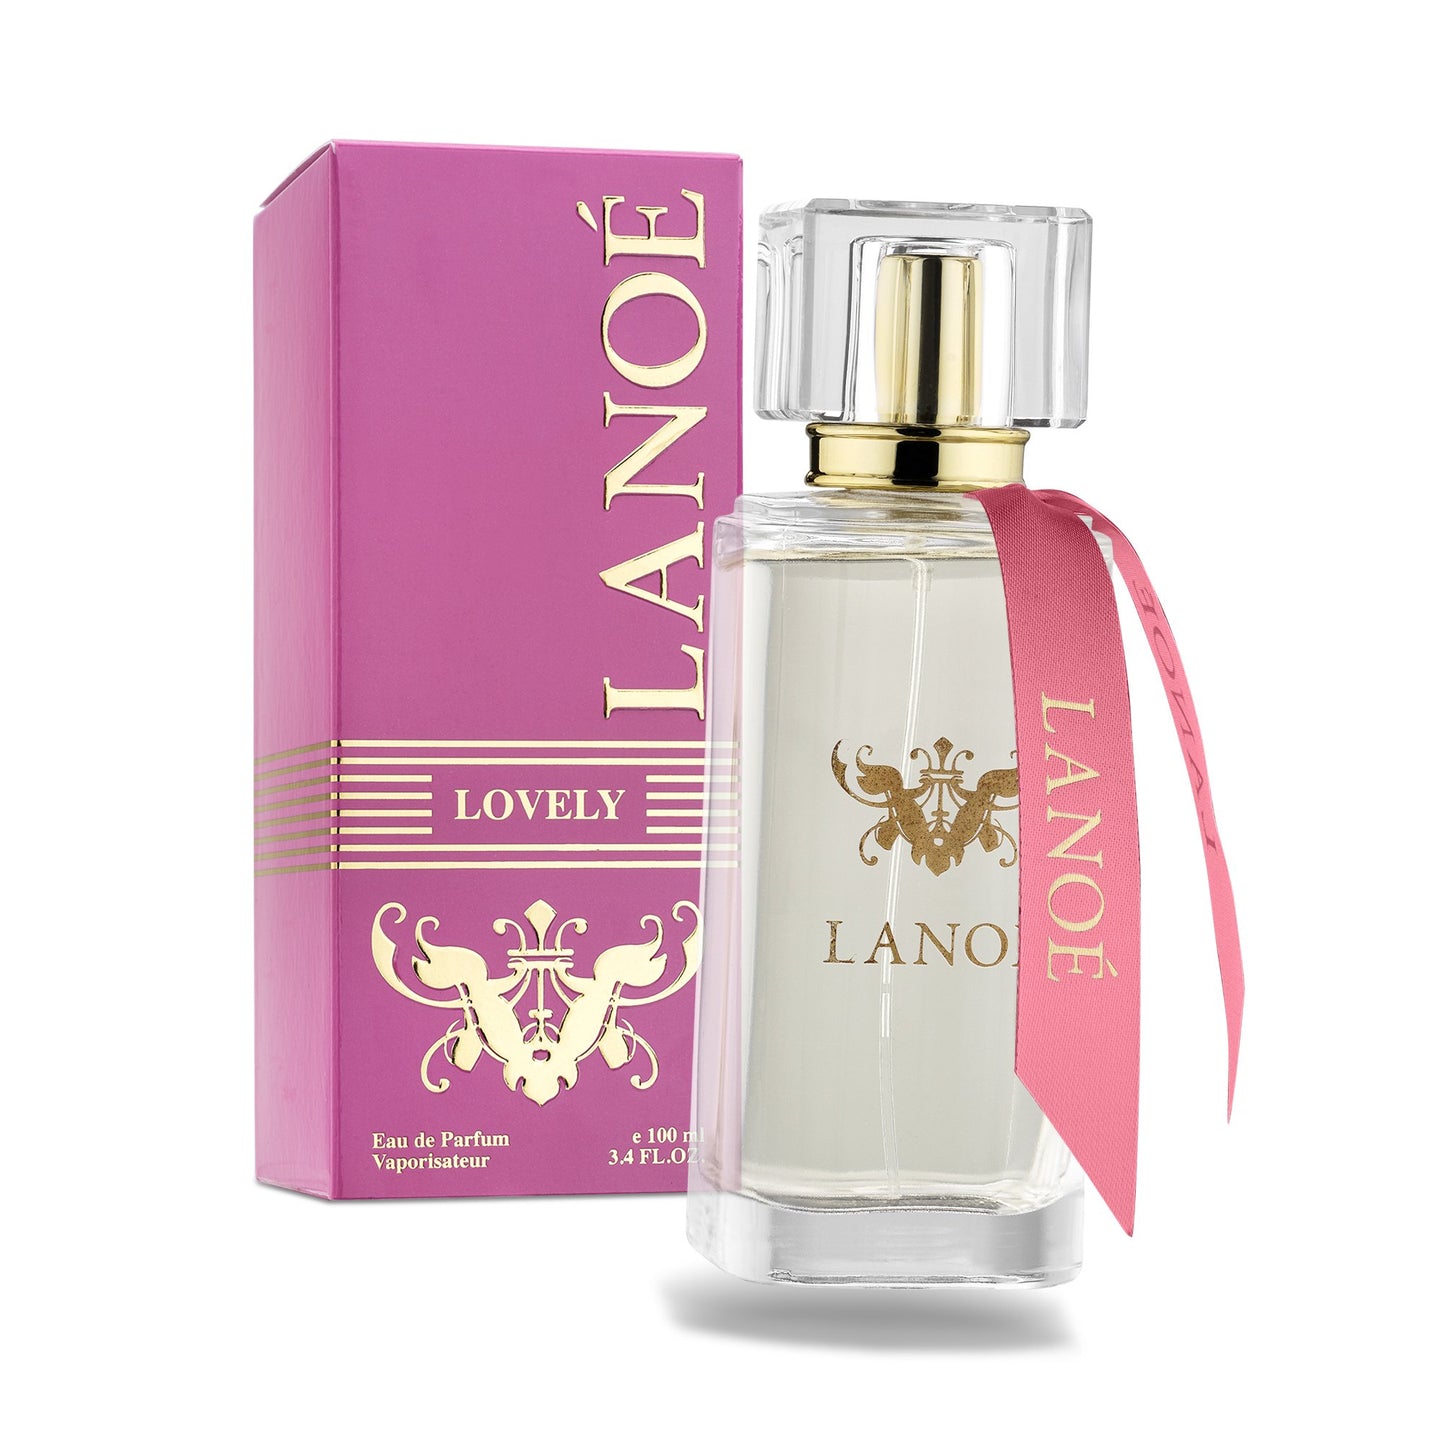 Lanoé Lovely - 100ml